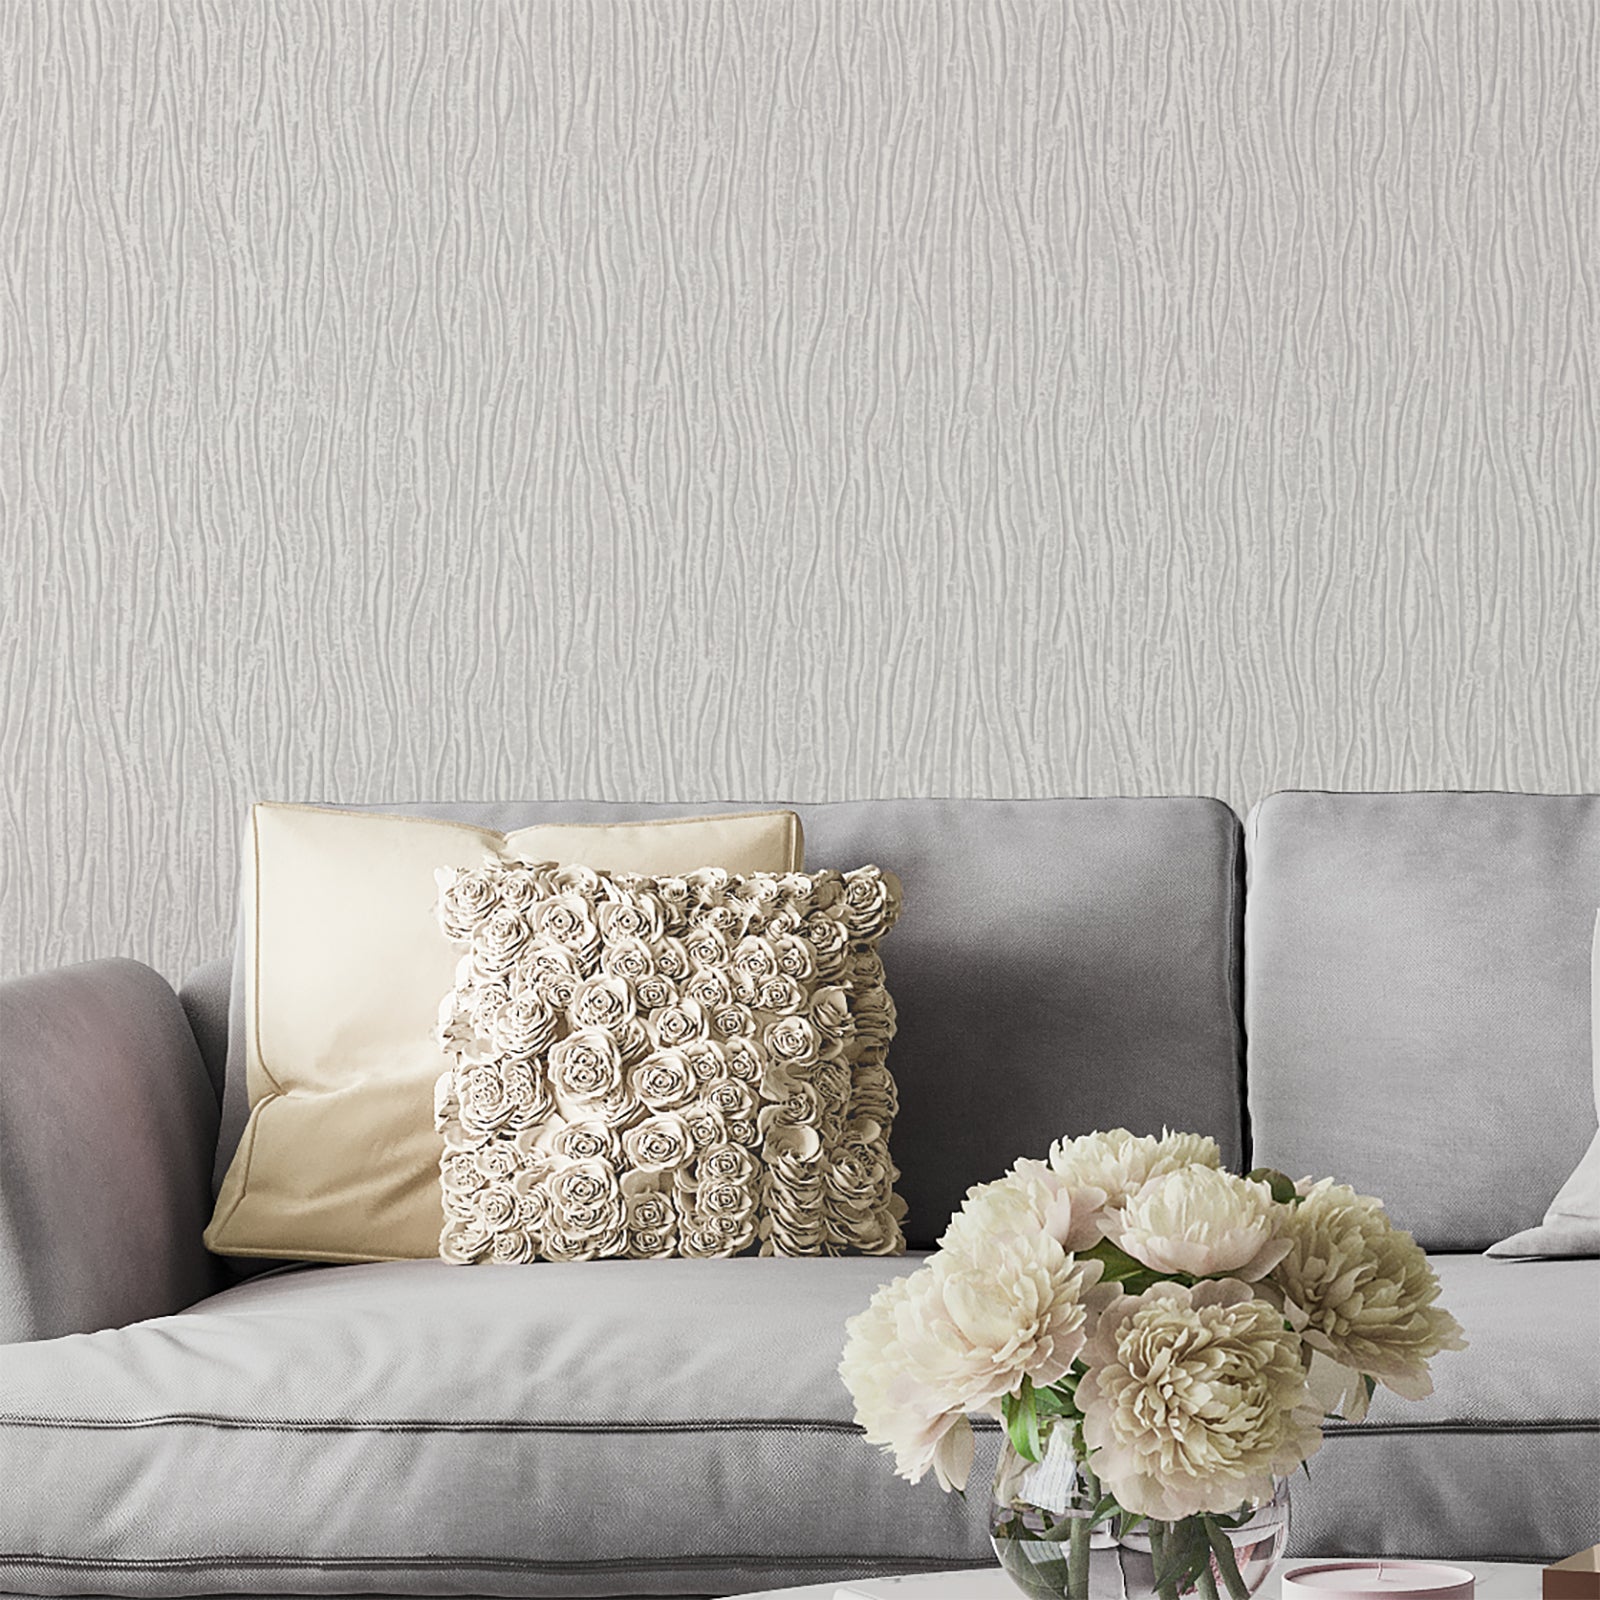 Tiffany Texture Soft Silver Wallpaper | WonderWall by Nobletts